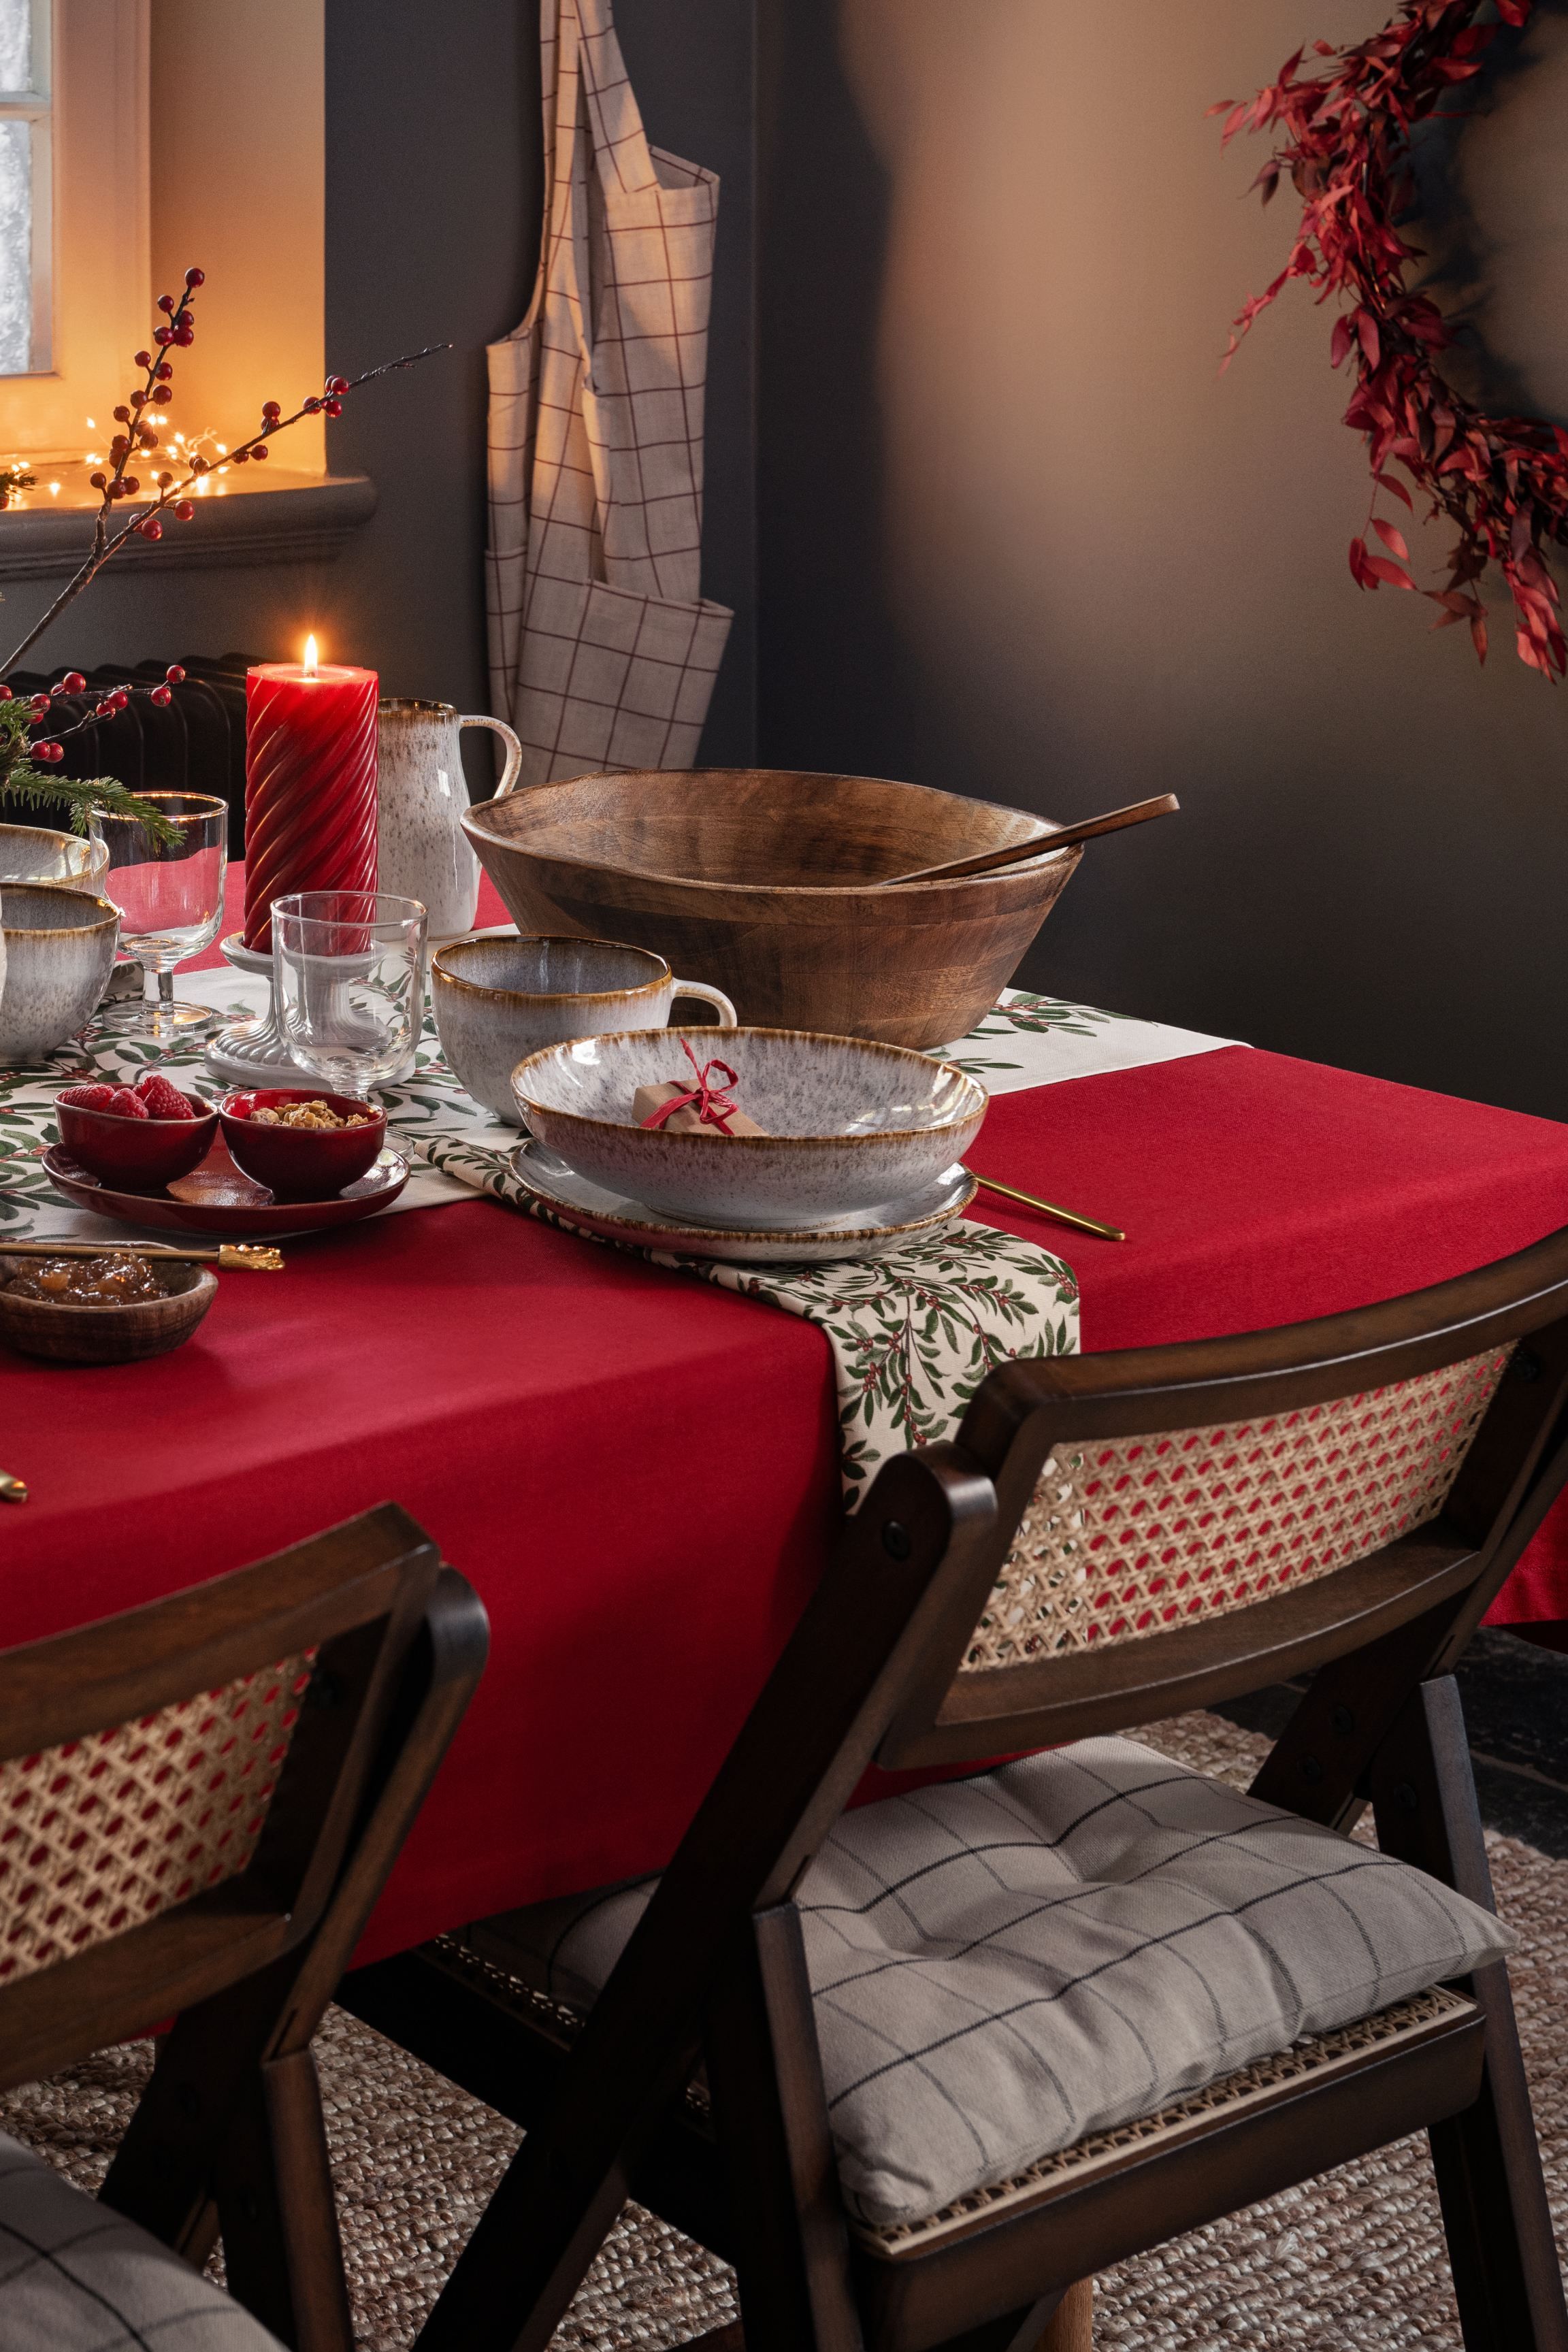 Christmas Reindeer Table Runner Cotton Linen Table Cover Dinner Home Decoration 